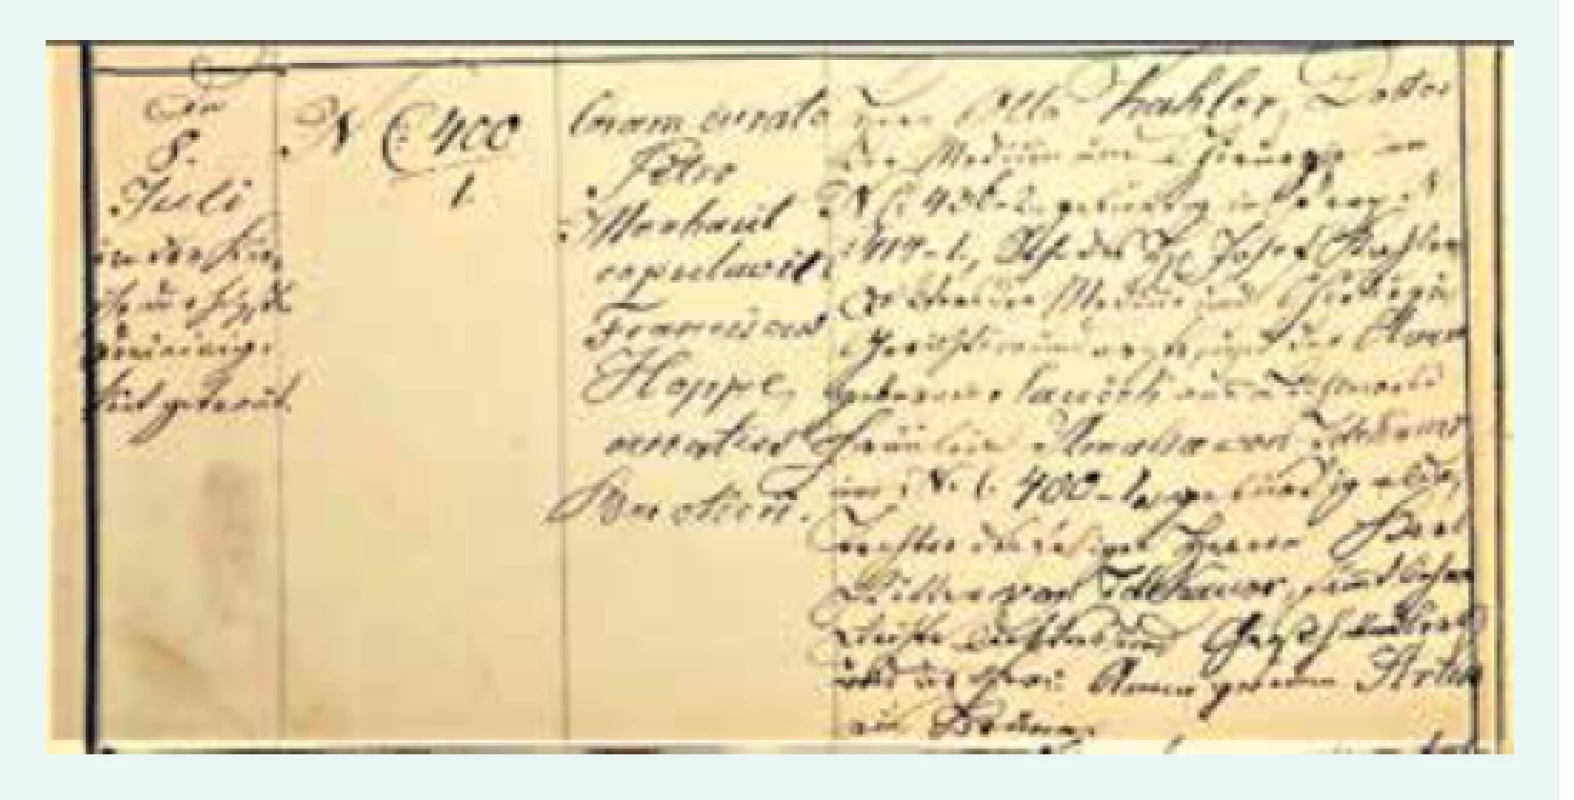 Zápis Ottova sňatku s Amélií Zdekauerovou
(1876) – levá strana